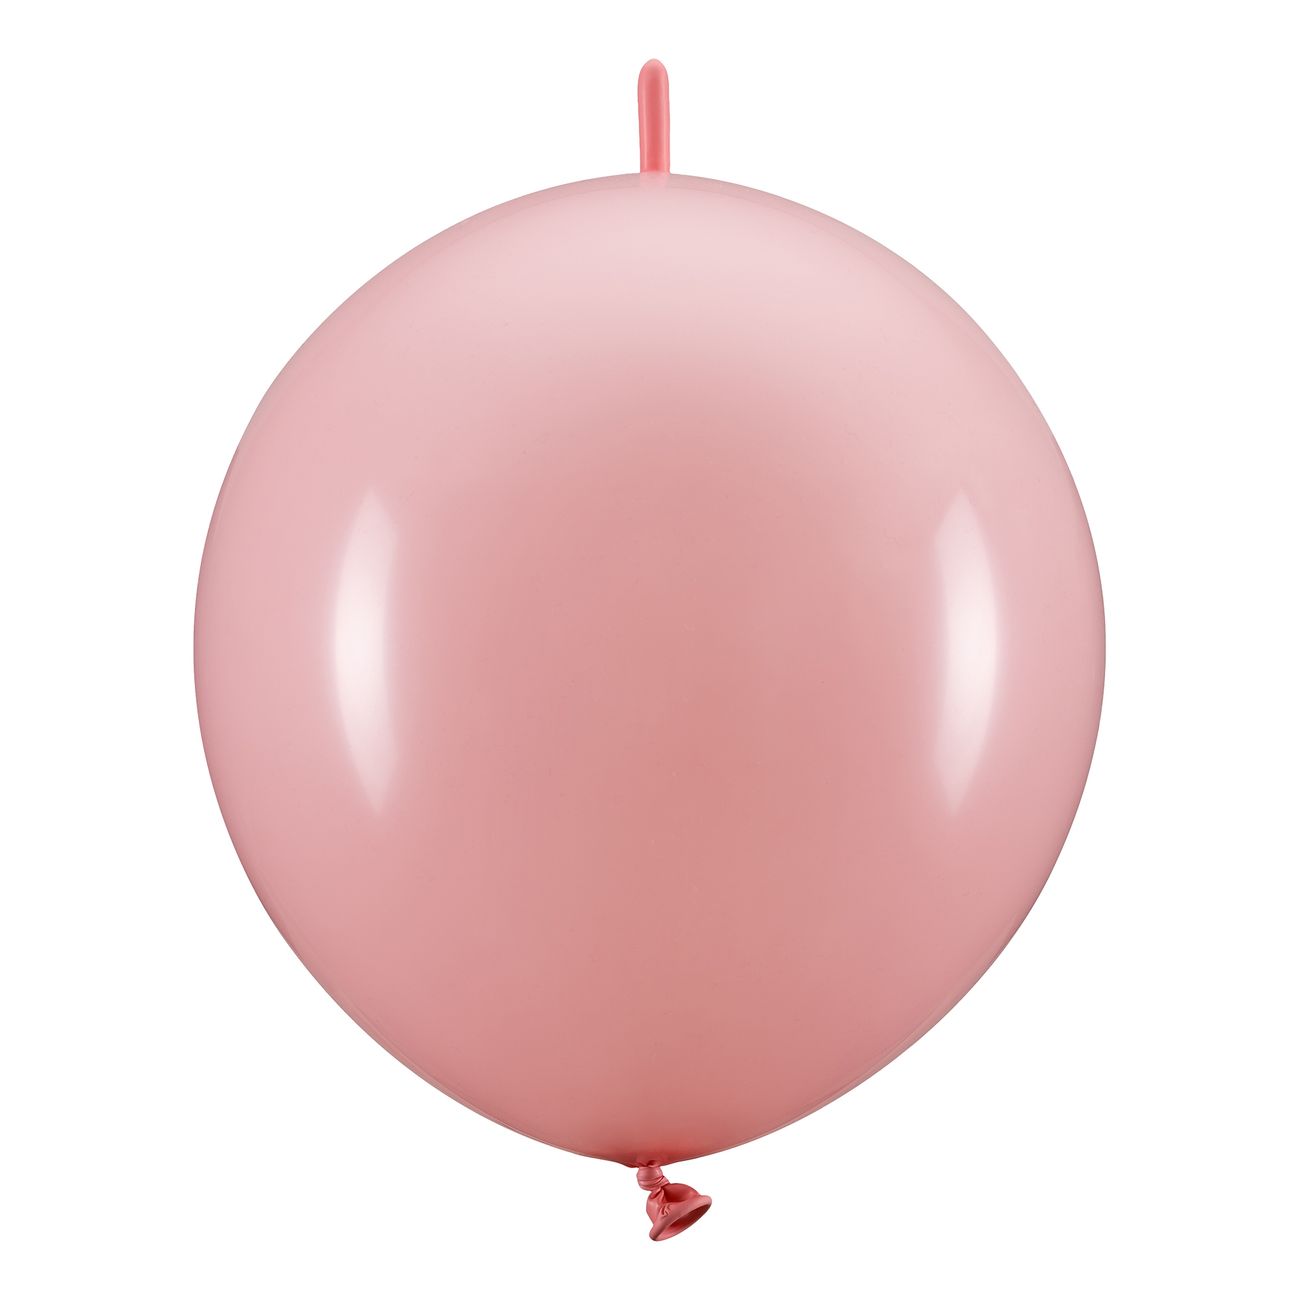 lankballonger-ljusrosa-101346-1